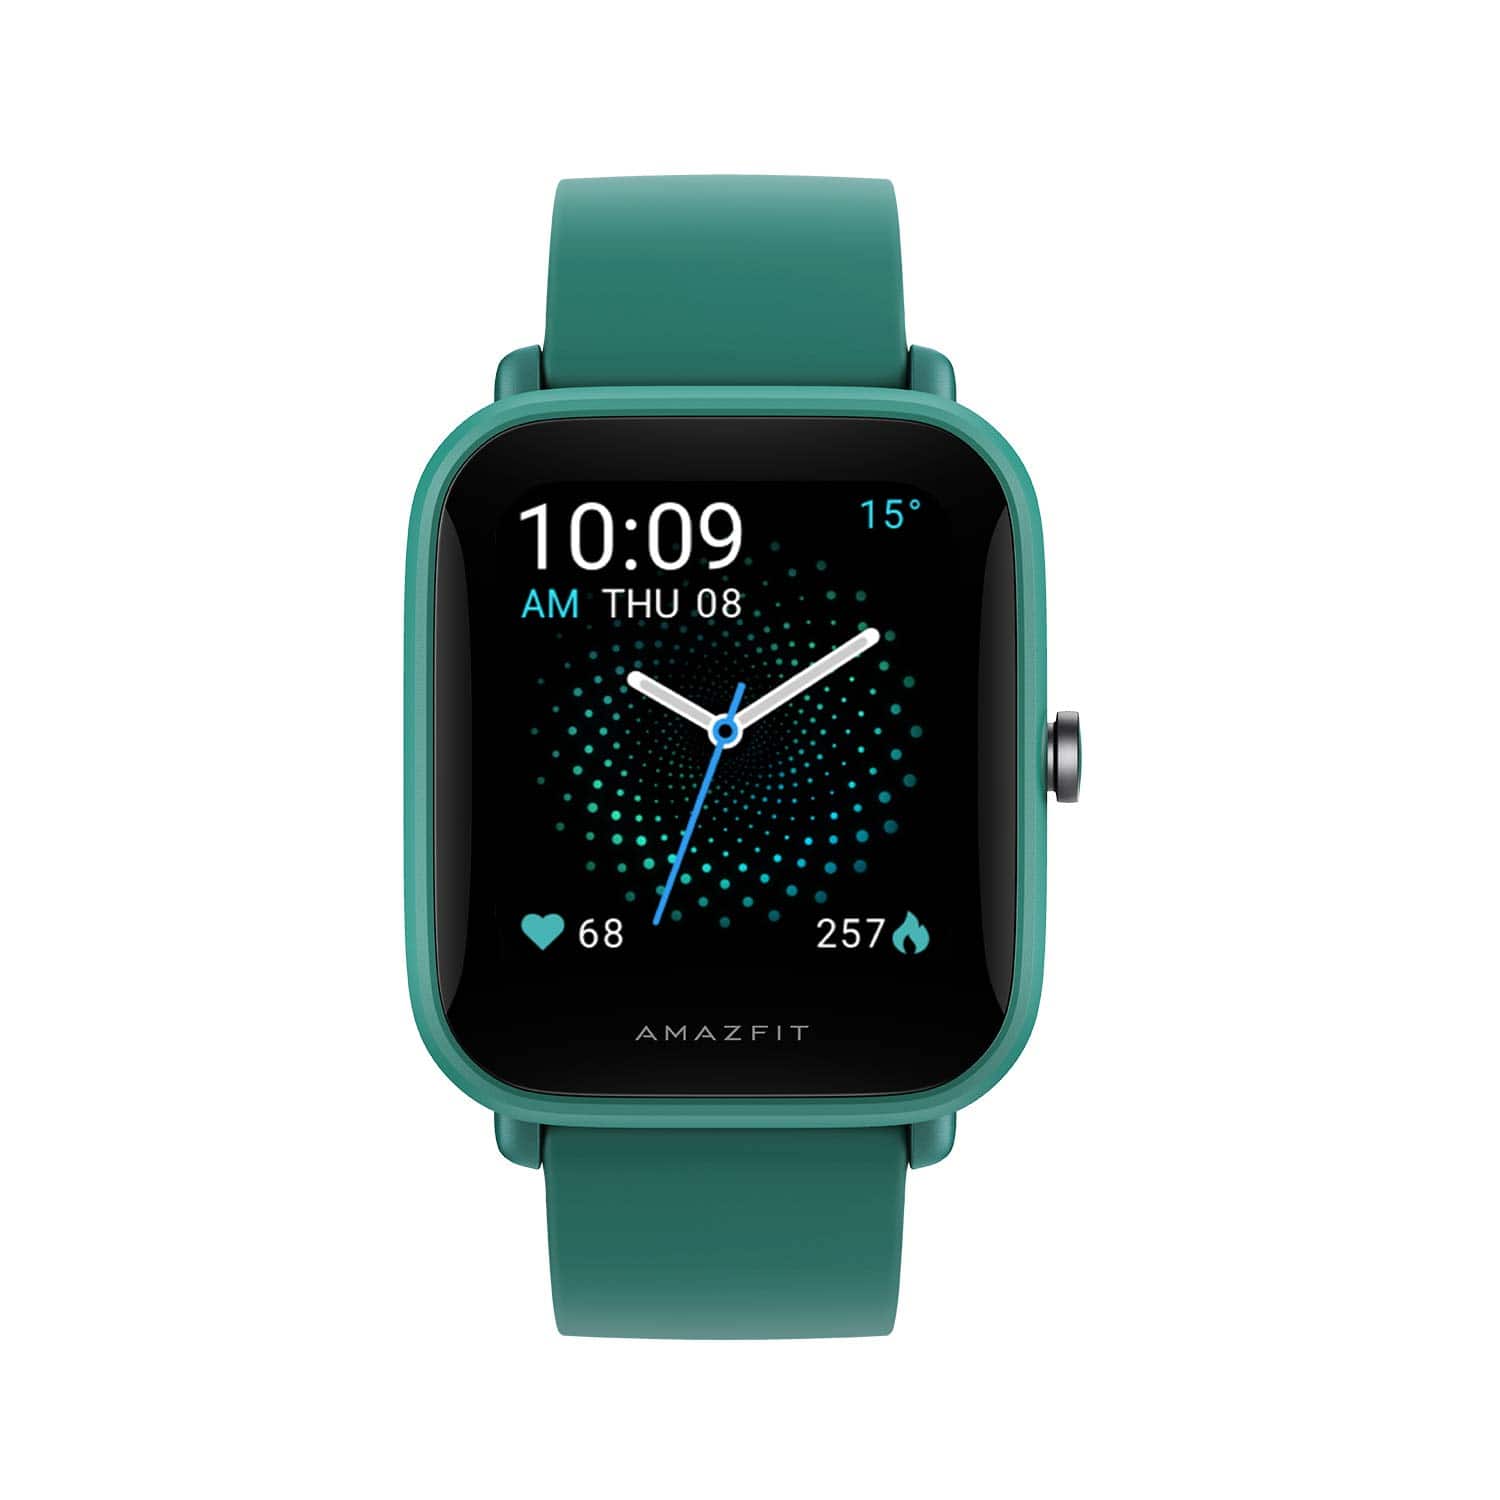 MASX Oasis X Premium GPS Smart Watch alexa Ultra HD Display Built-in GPS  Hi-Fi Bluetooth Phone Calls Military Grade Sports Watch - AliExpress